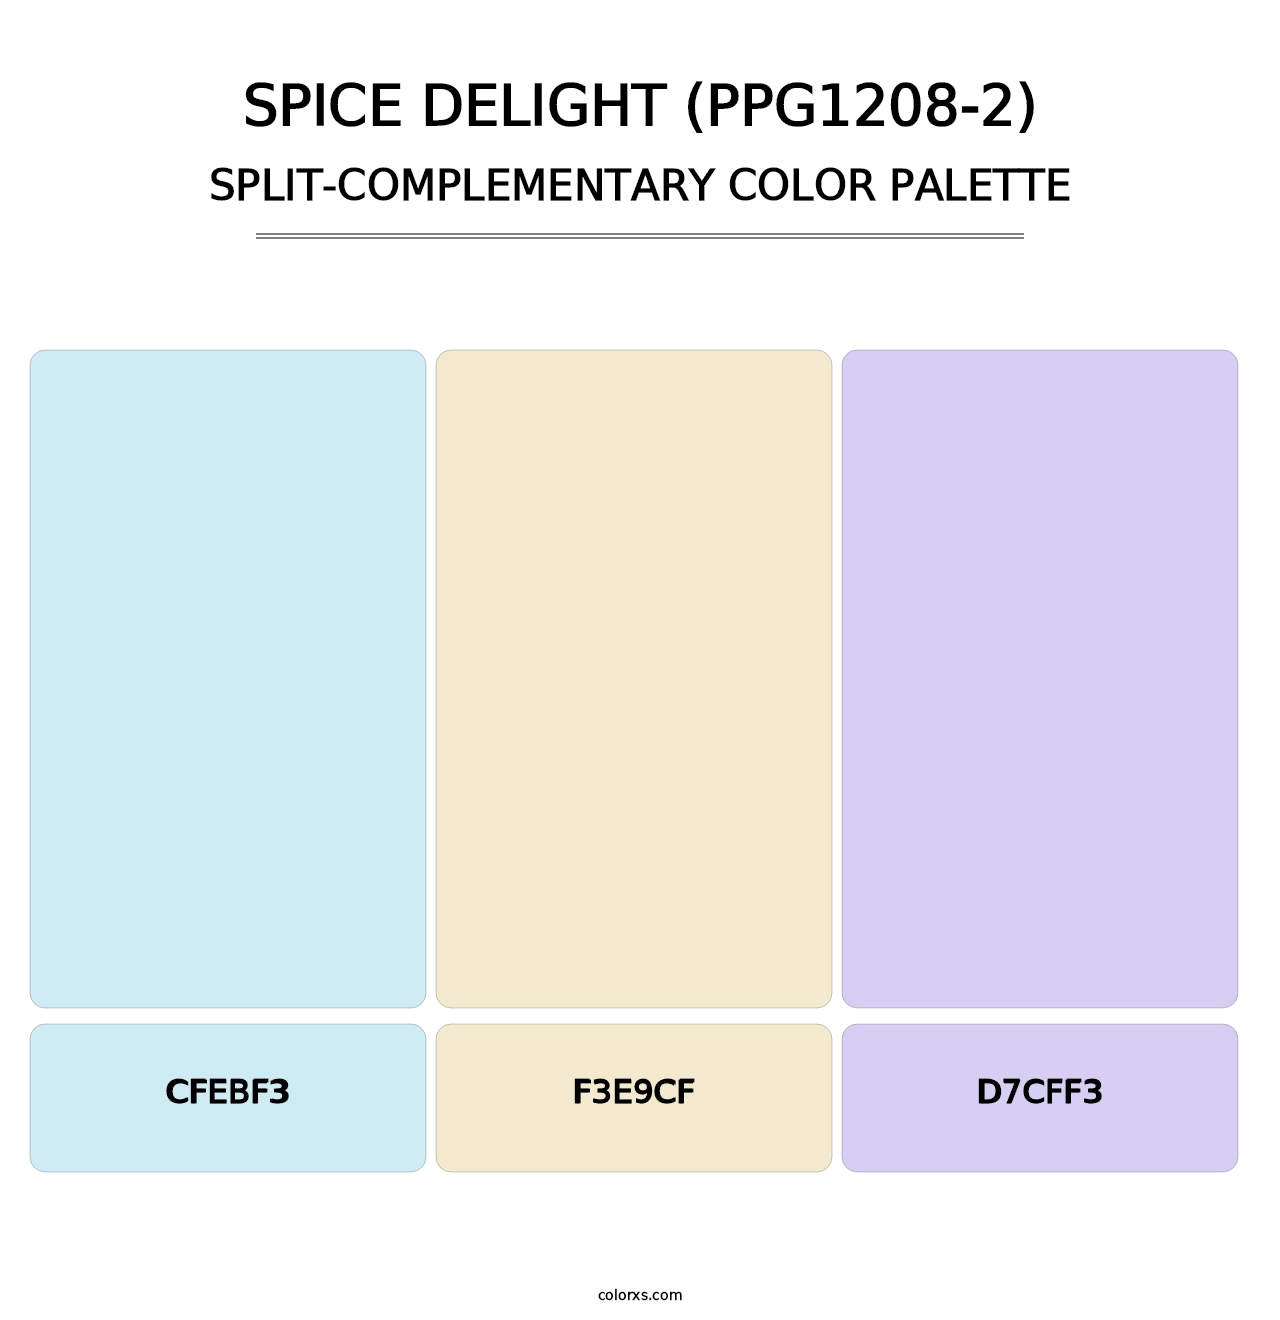 Spice Delight (PPG1208-2) - Split-Complementary Color Palette